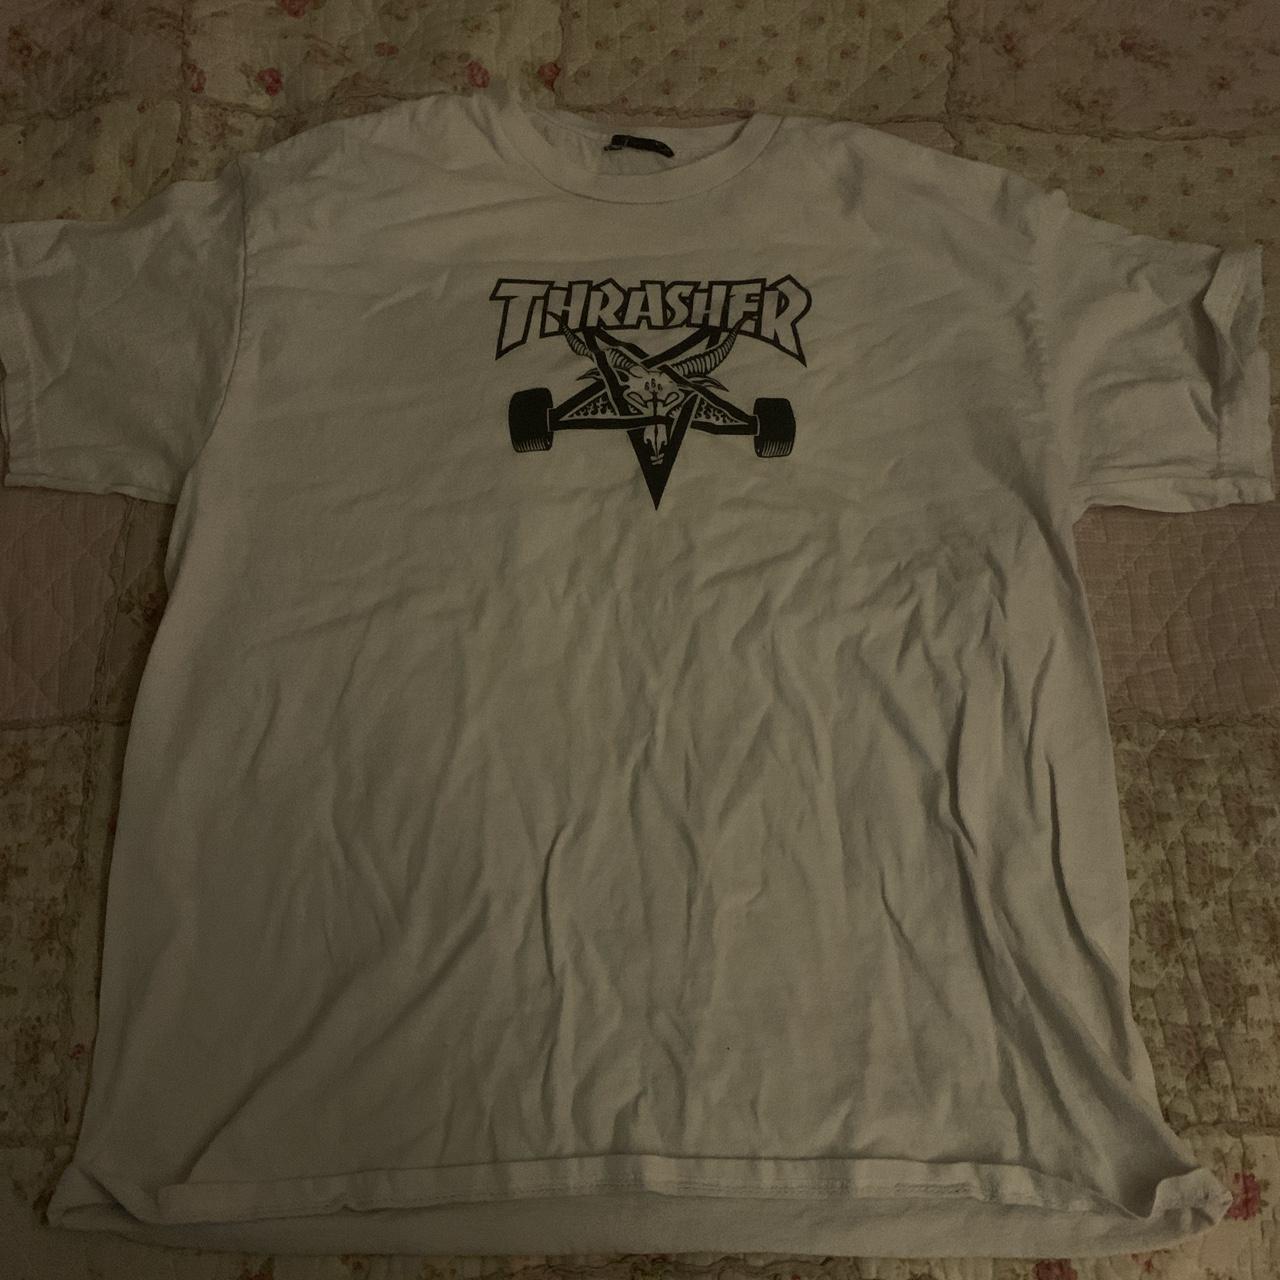 Thrasher Men's White and Black T-shirt